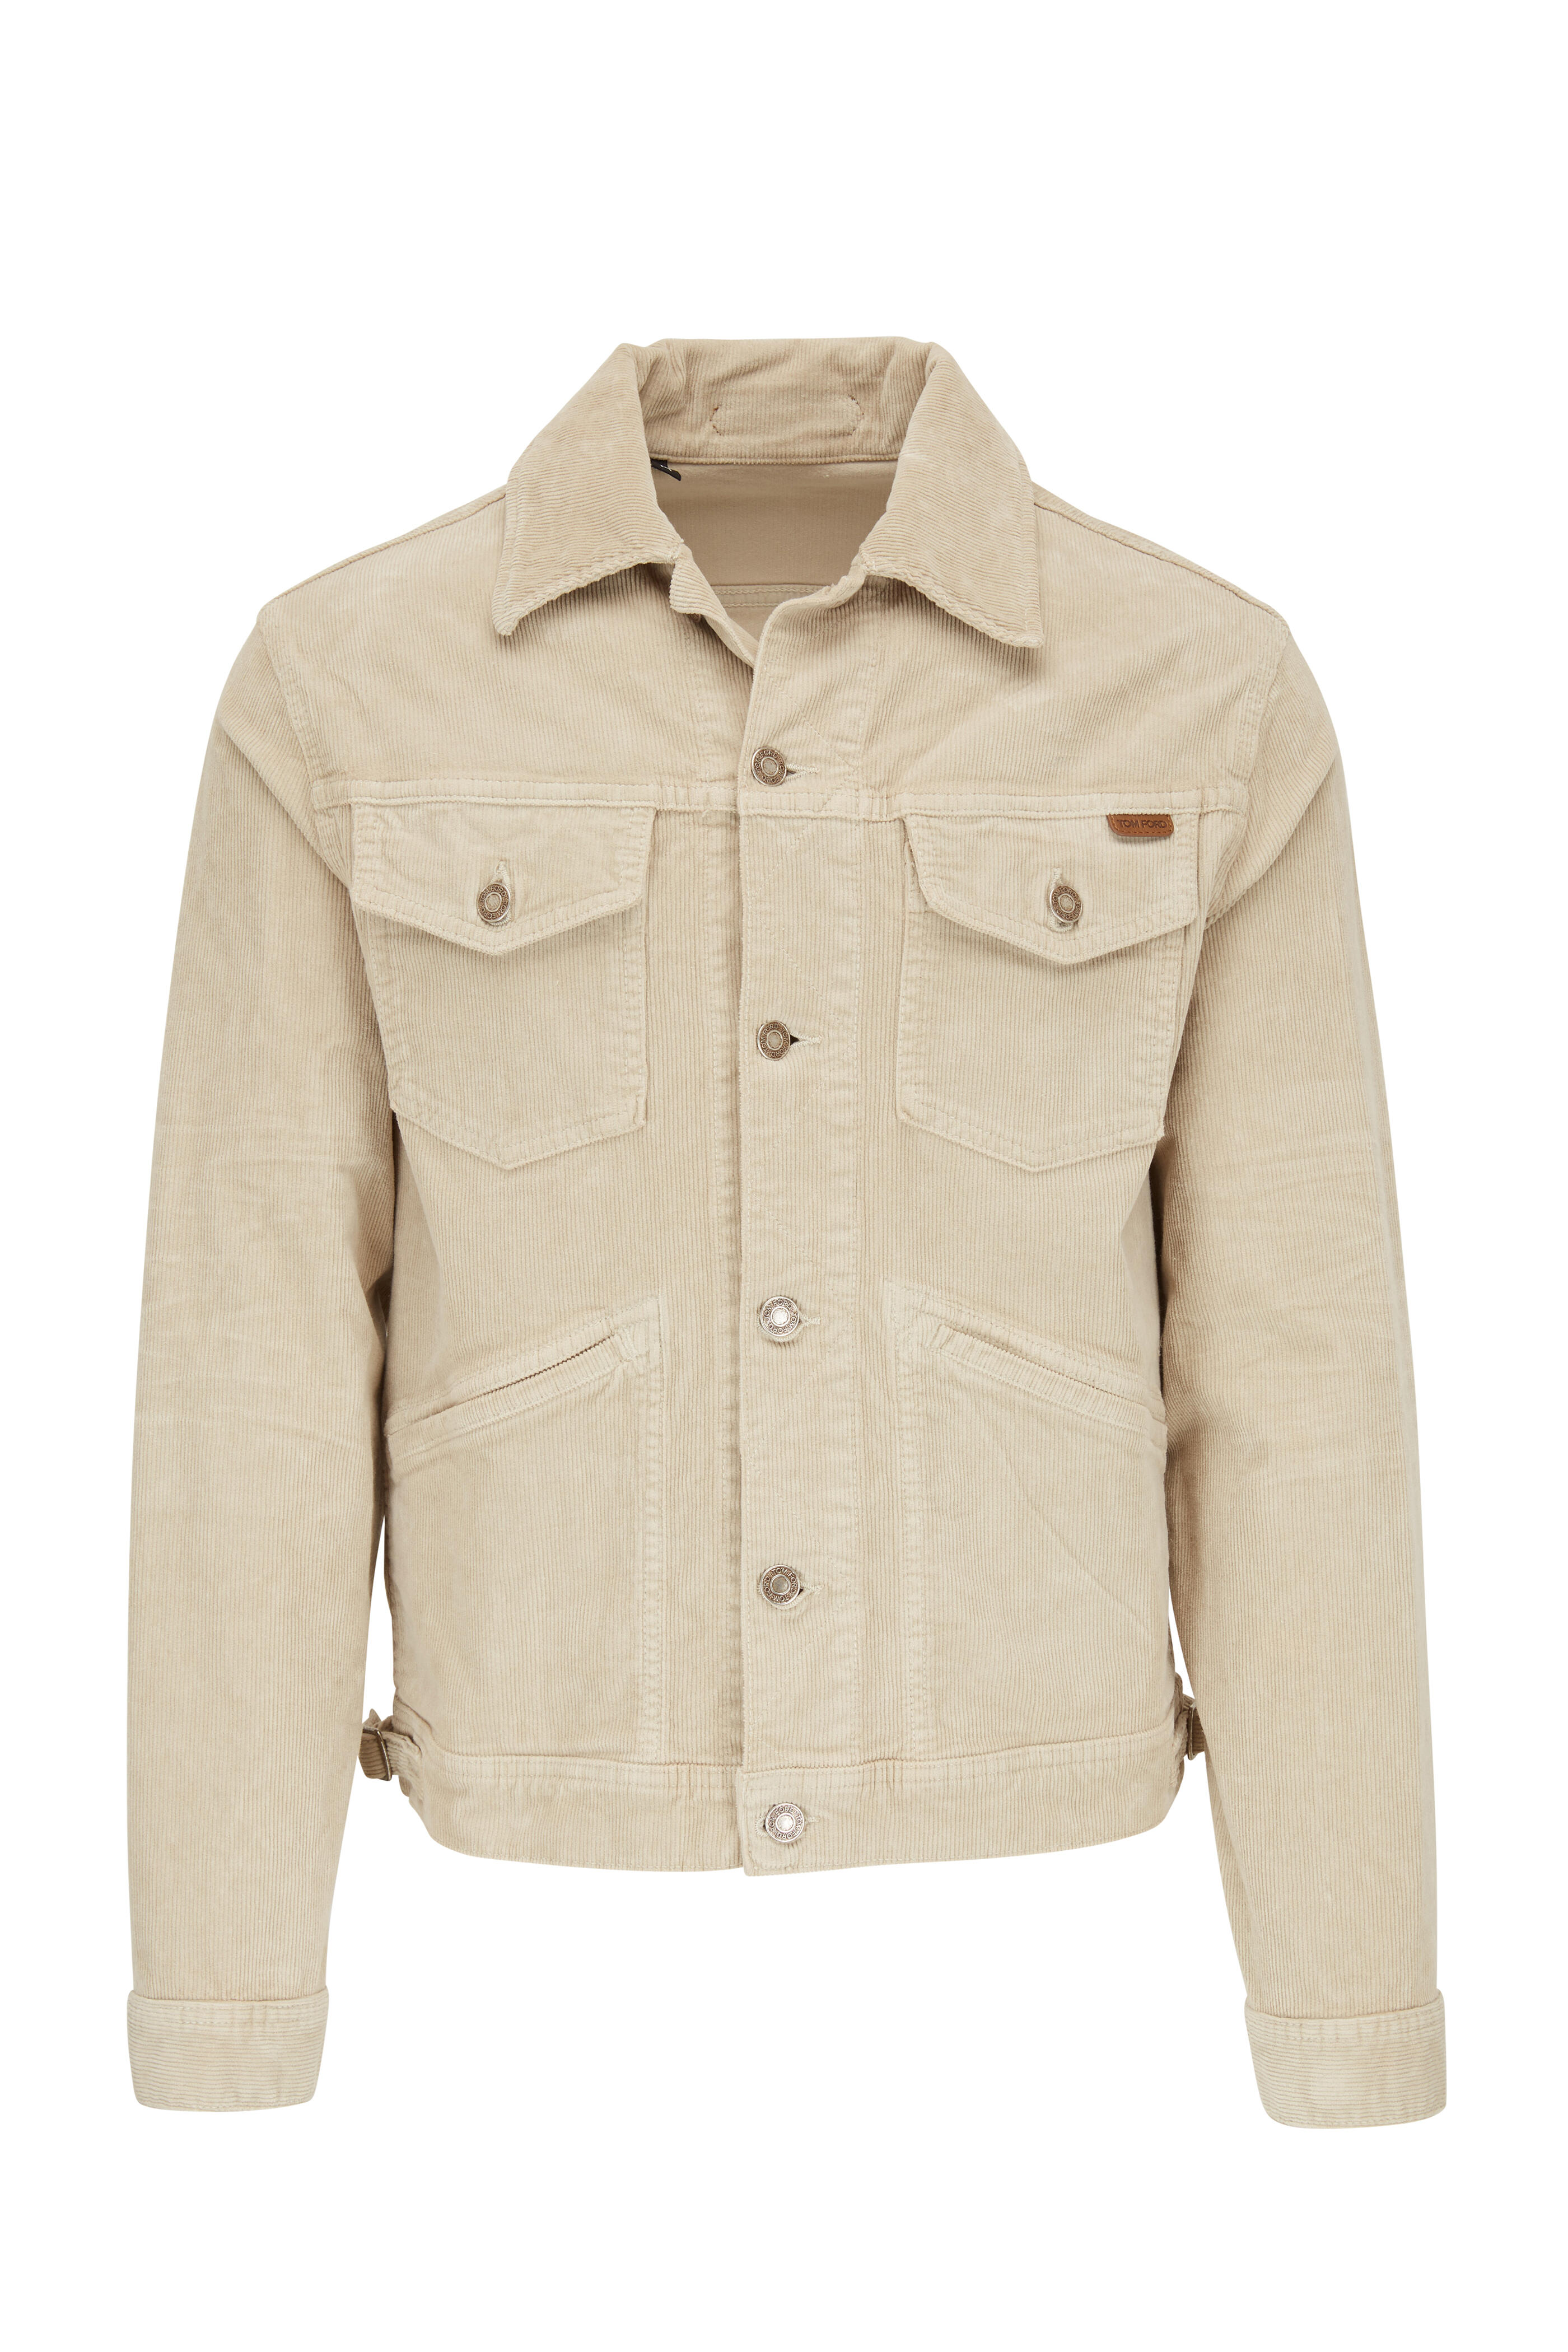 Tom Ford - Beige Stretch Cotton Corduroy Jacket